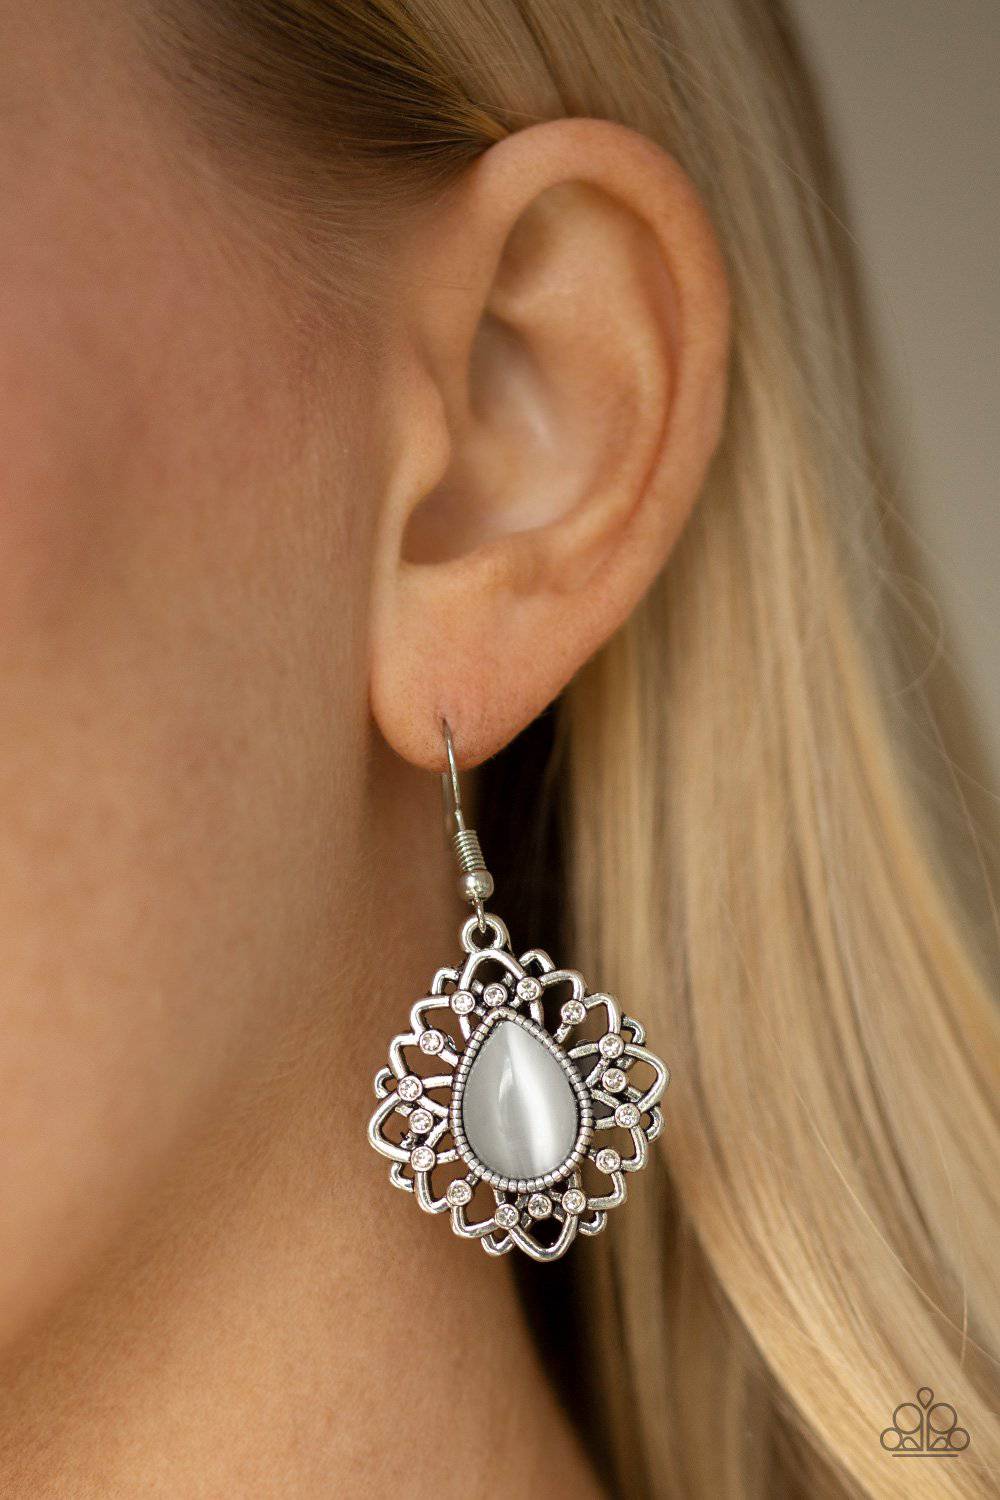 Totally GLOWN Away - White Cat's Eye Earrings - Paparazzi Accessories - GlaMarous Titi Jewels